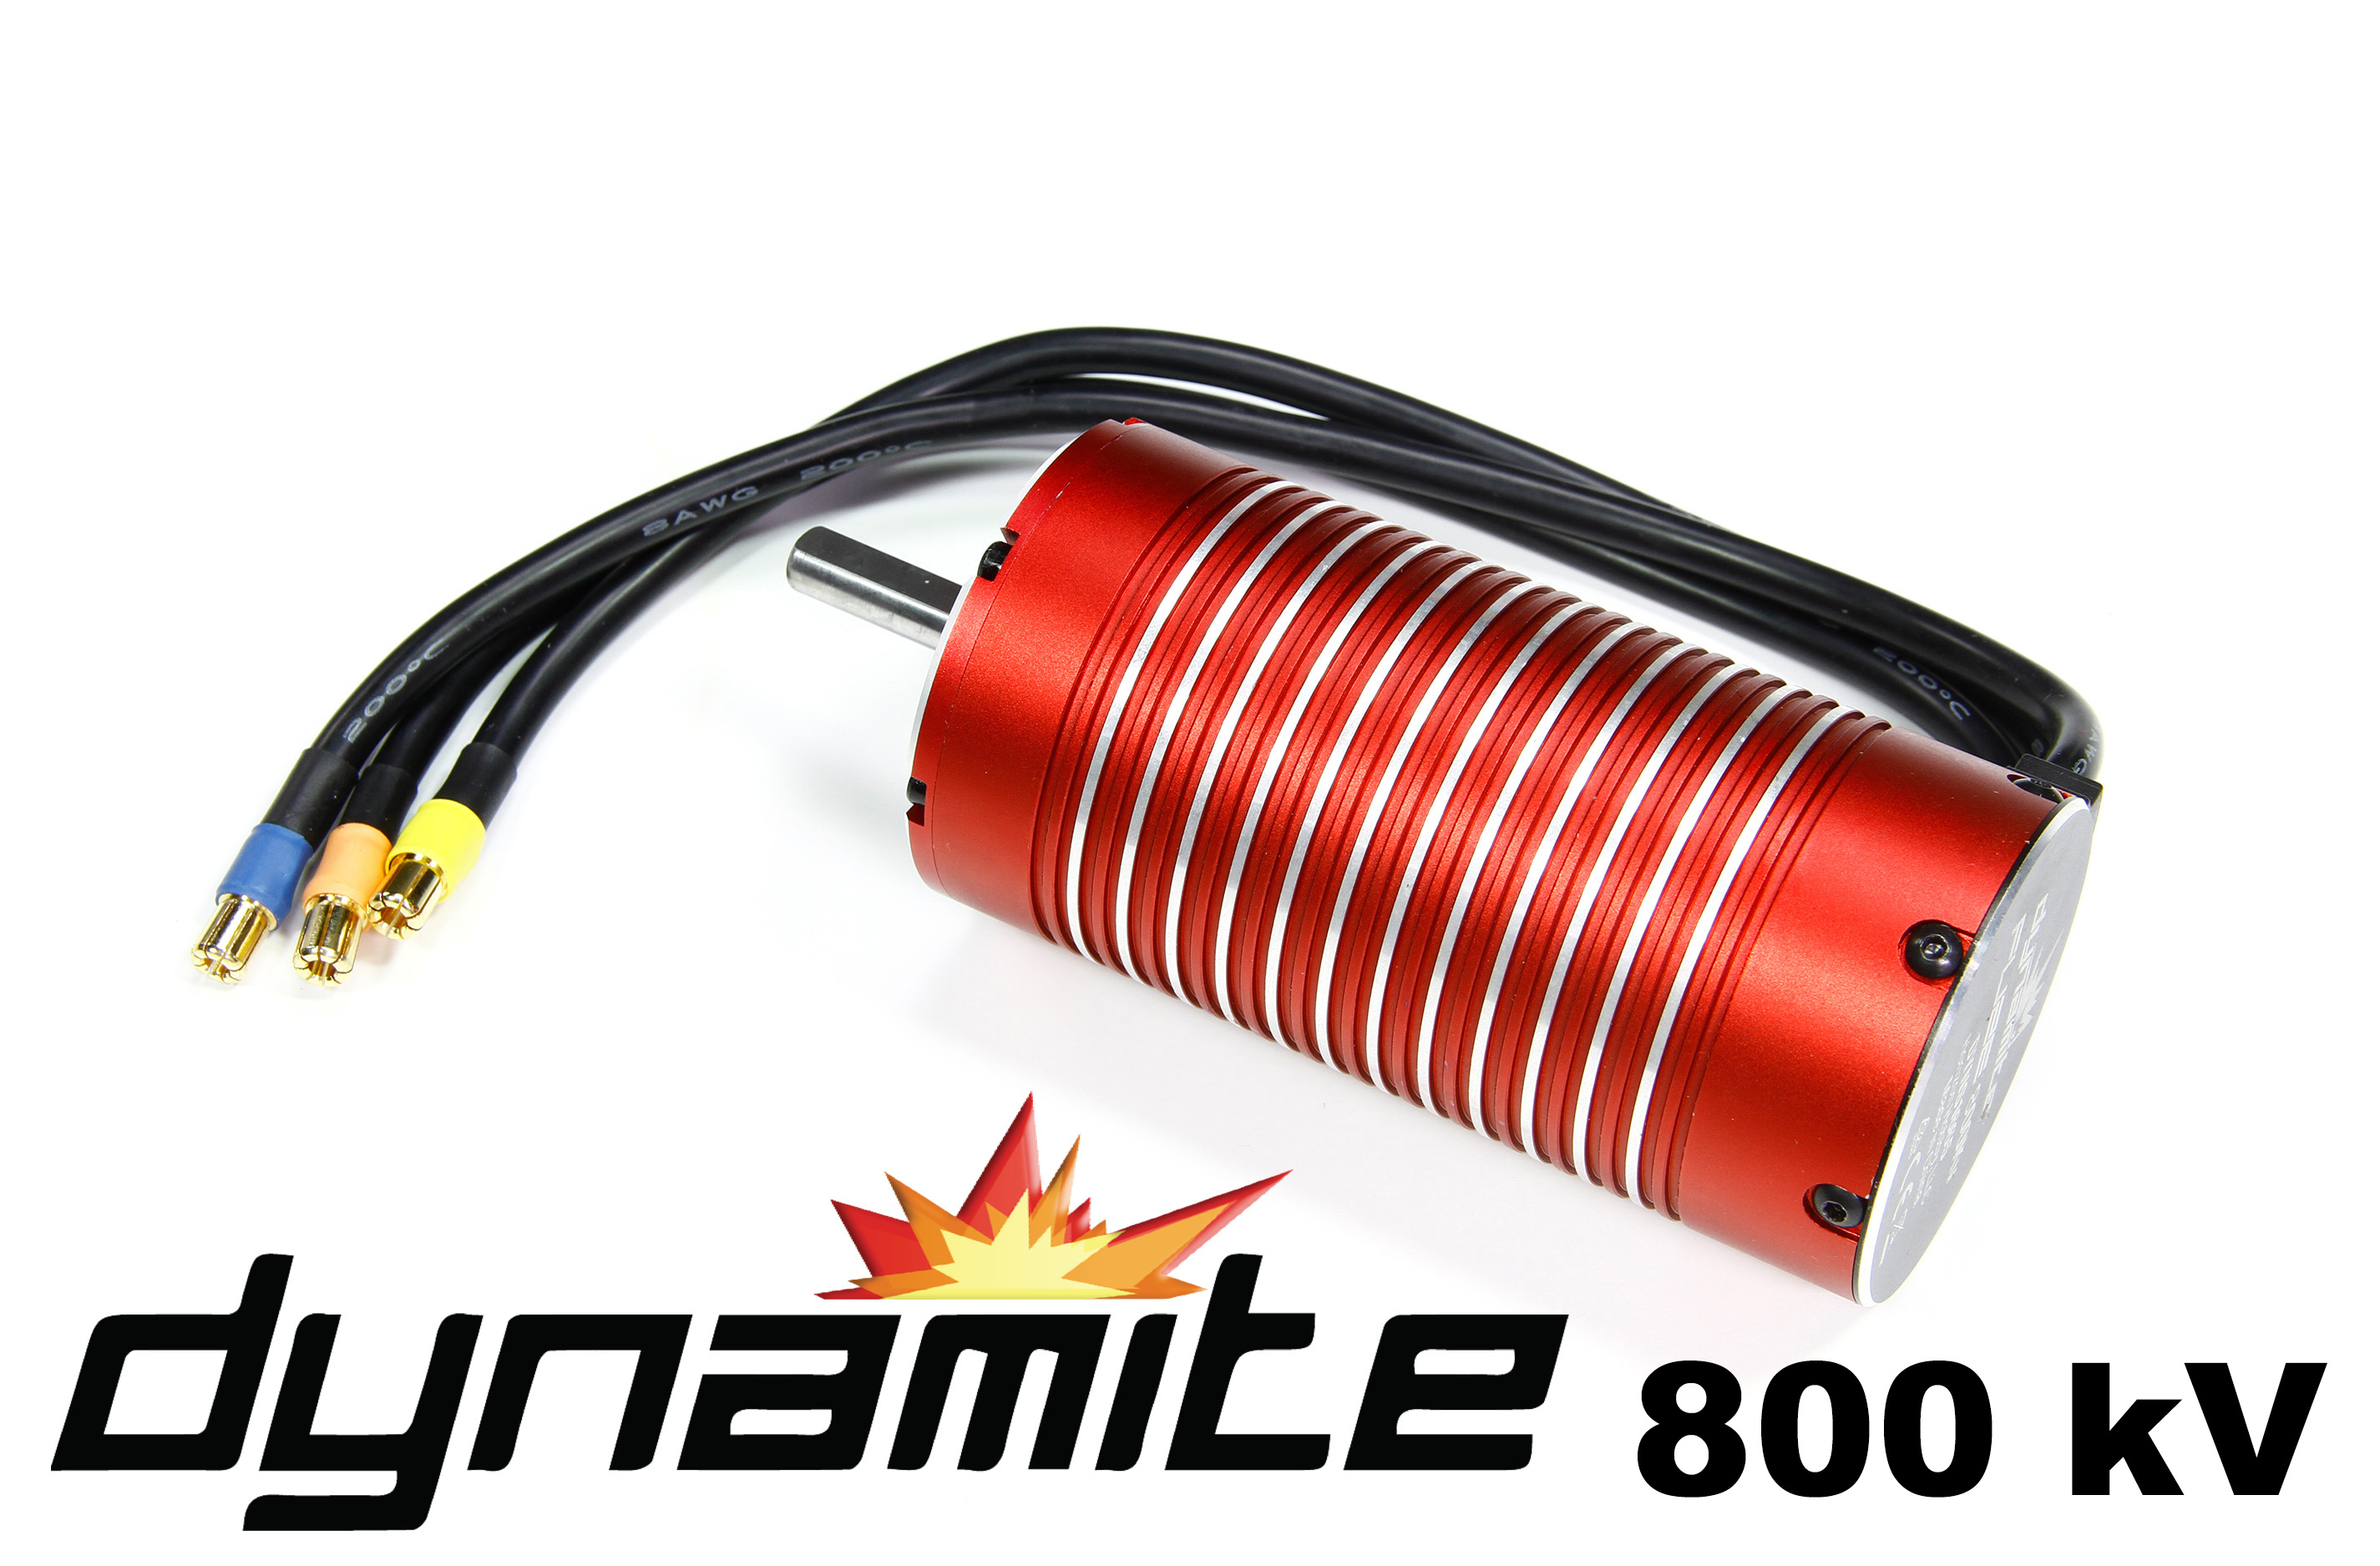 DYNS1665 Dynamite 1/5th Brushless Motor, 800kv